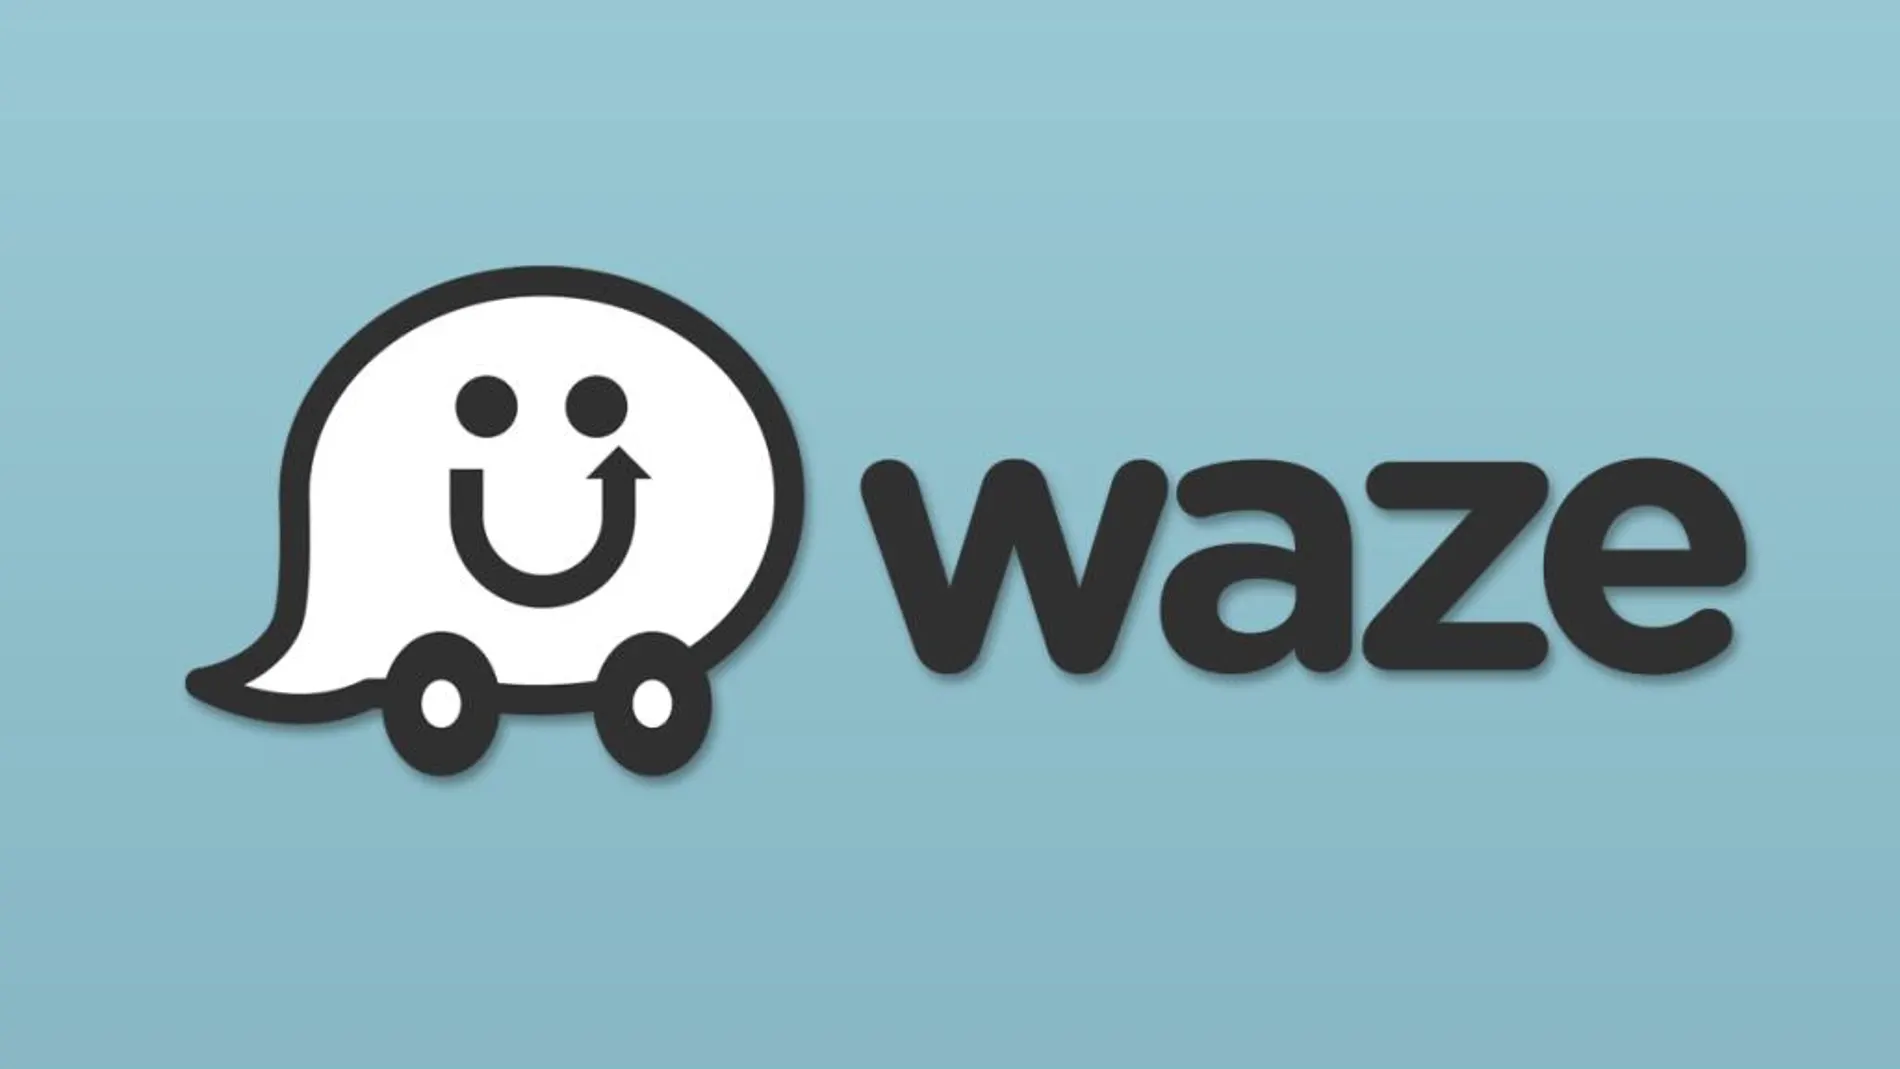 Economía Digital en Inglés: Waze and the dangers on Social Media to law enforcement